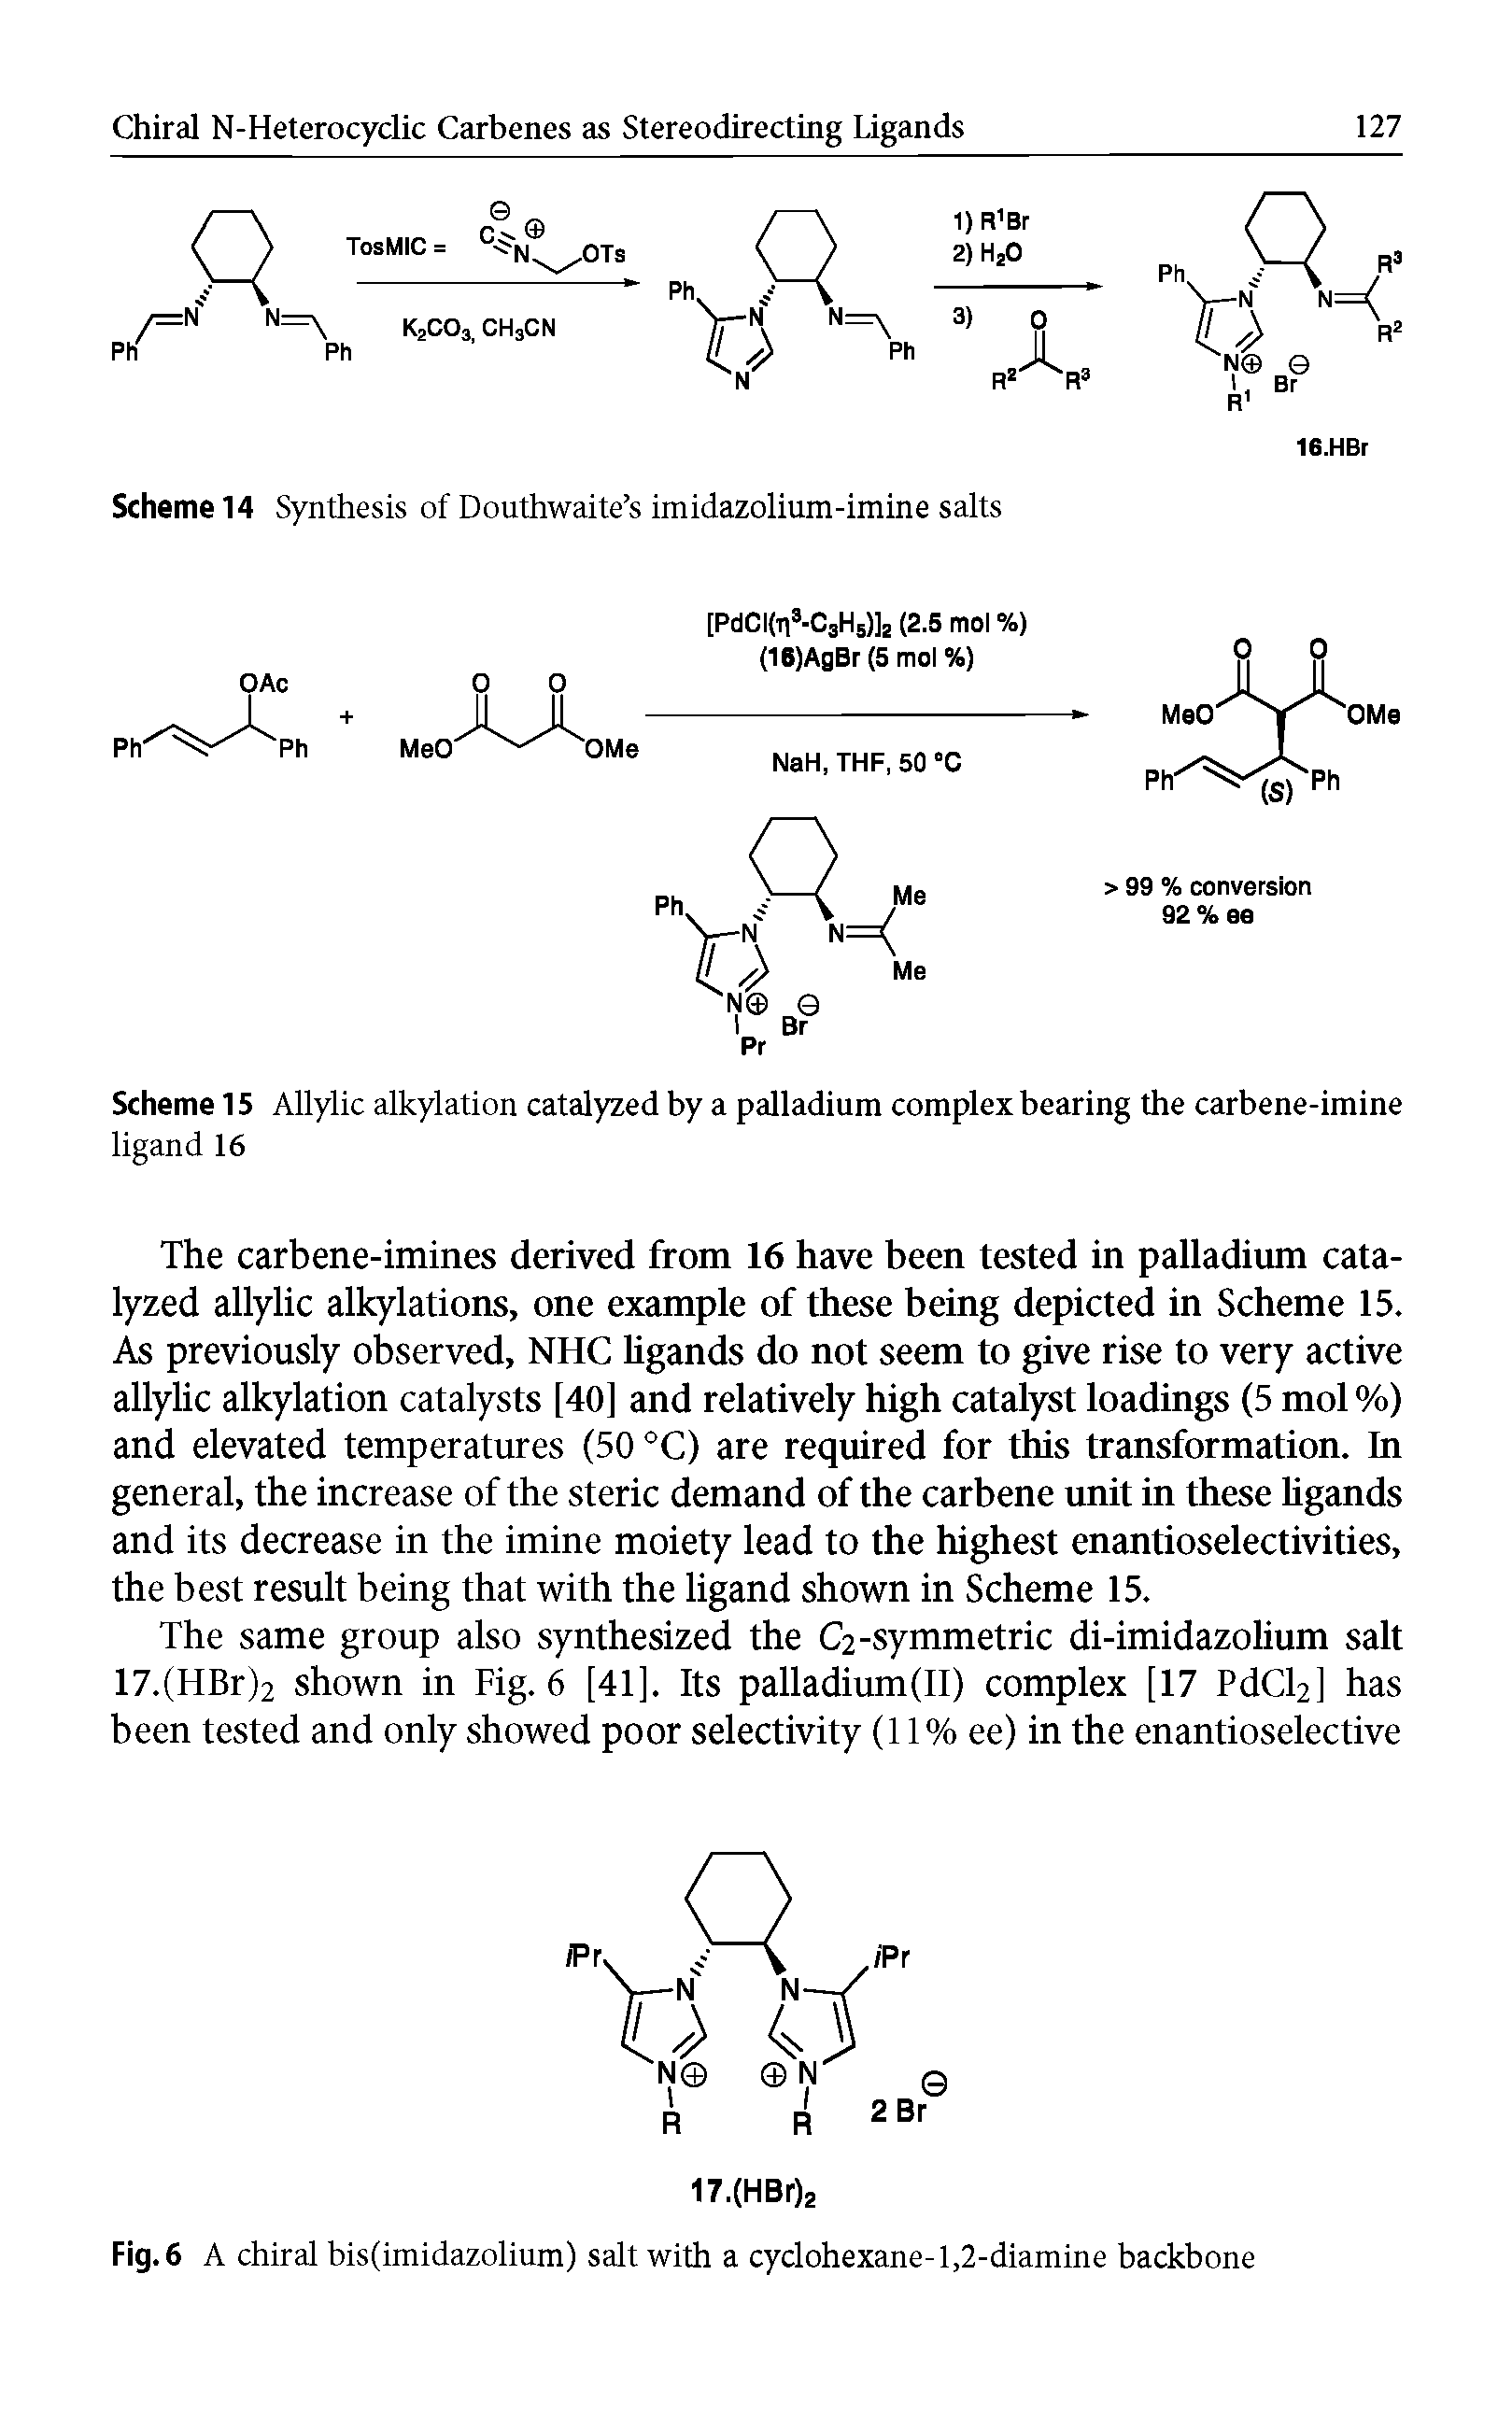 Fig. 6 A chiral bis(imidazolium) salt with a cyclohexane-1,2-diamine backbone...